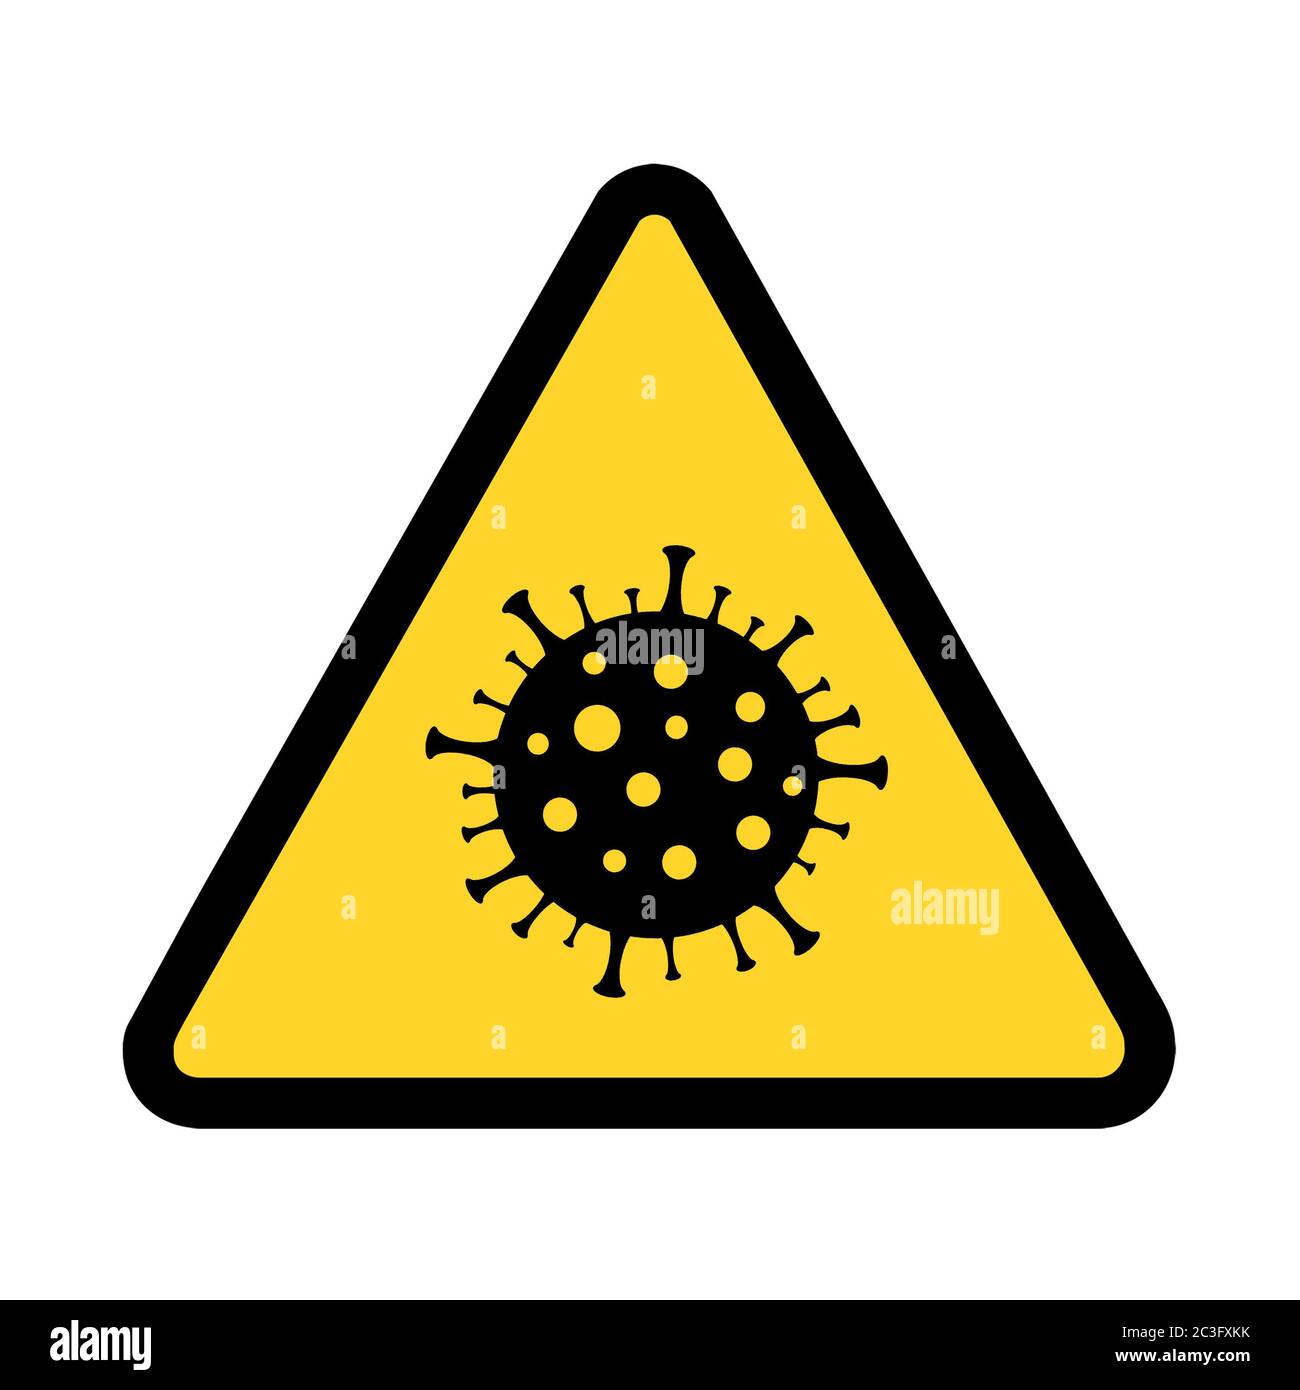 Coronavirus warning sign. Pandemic outbreak medical concept. Stock Photo